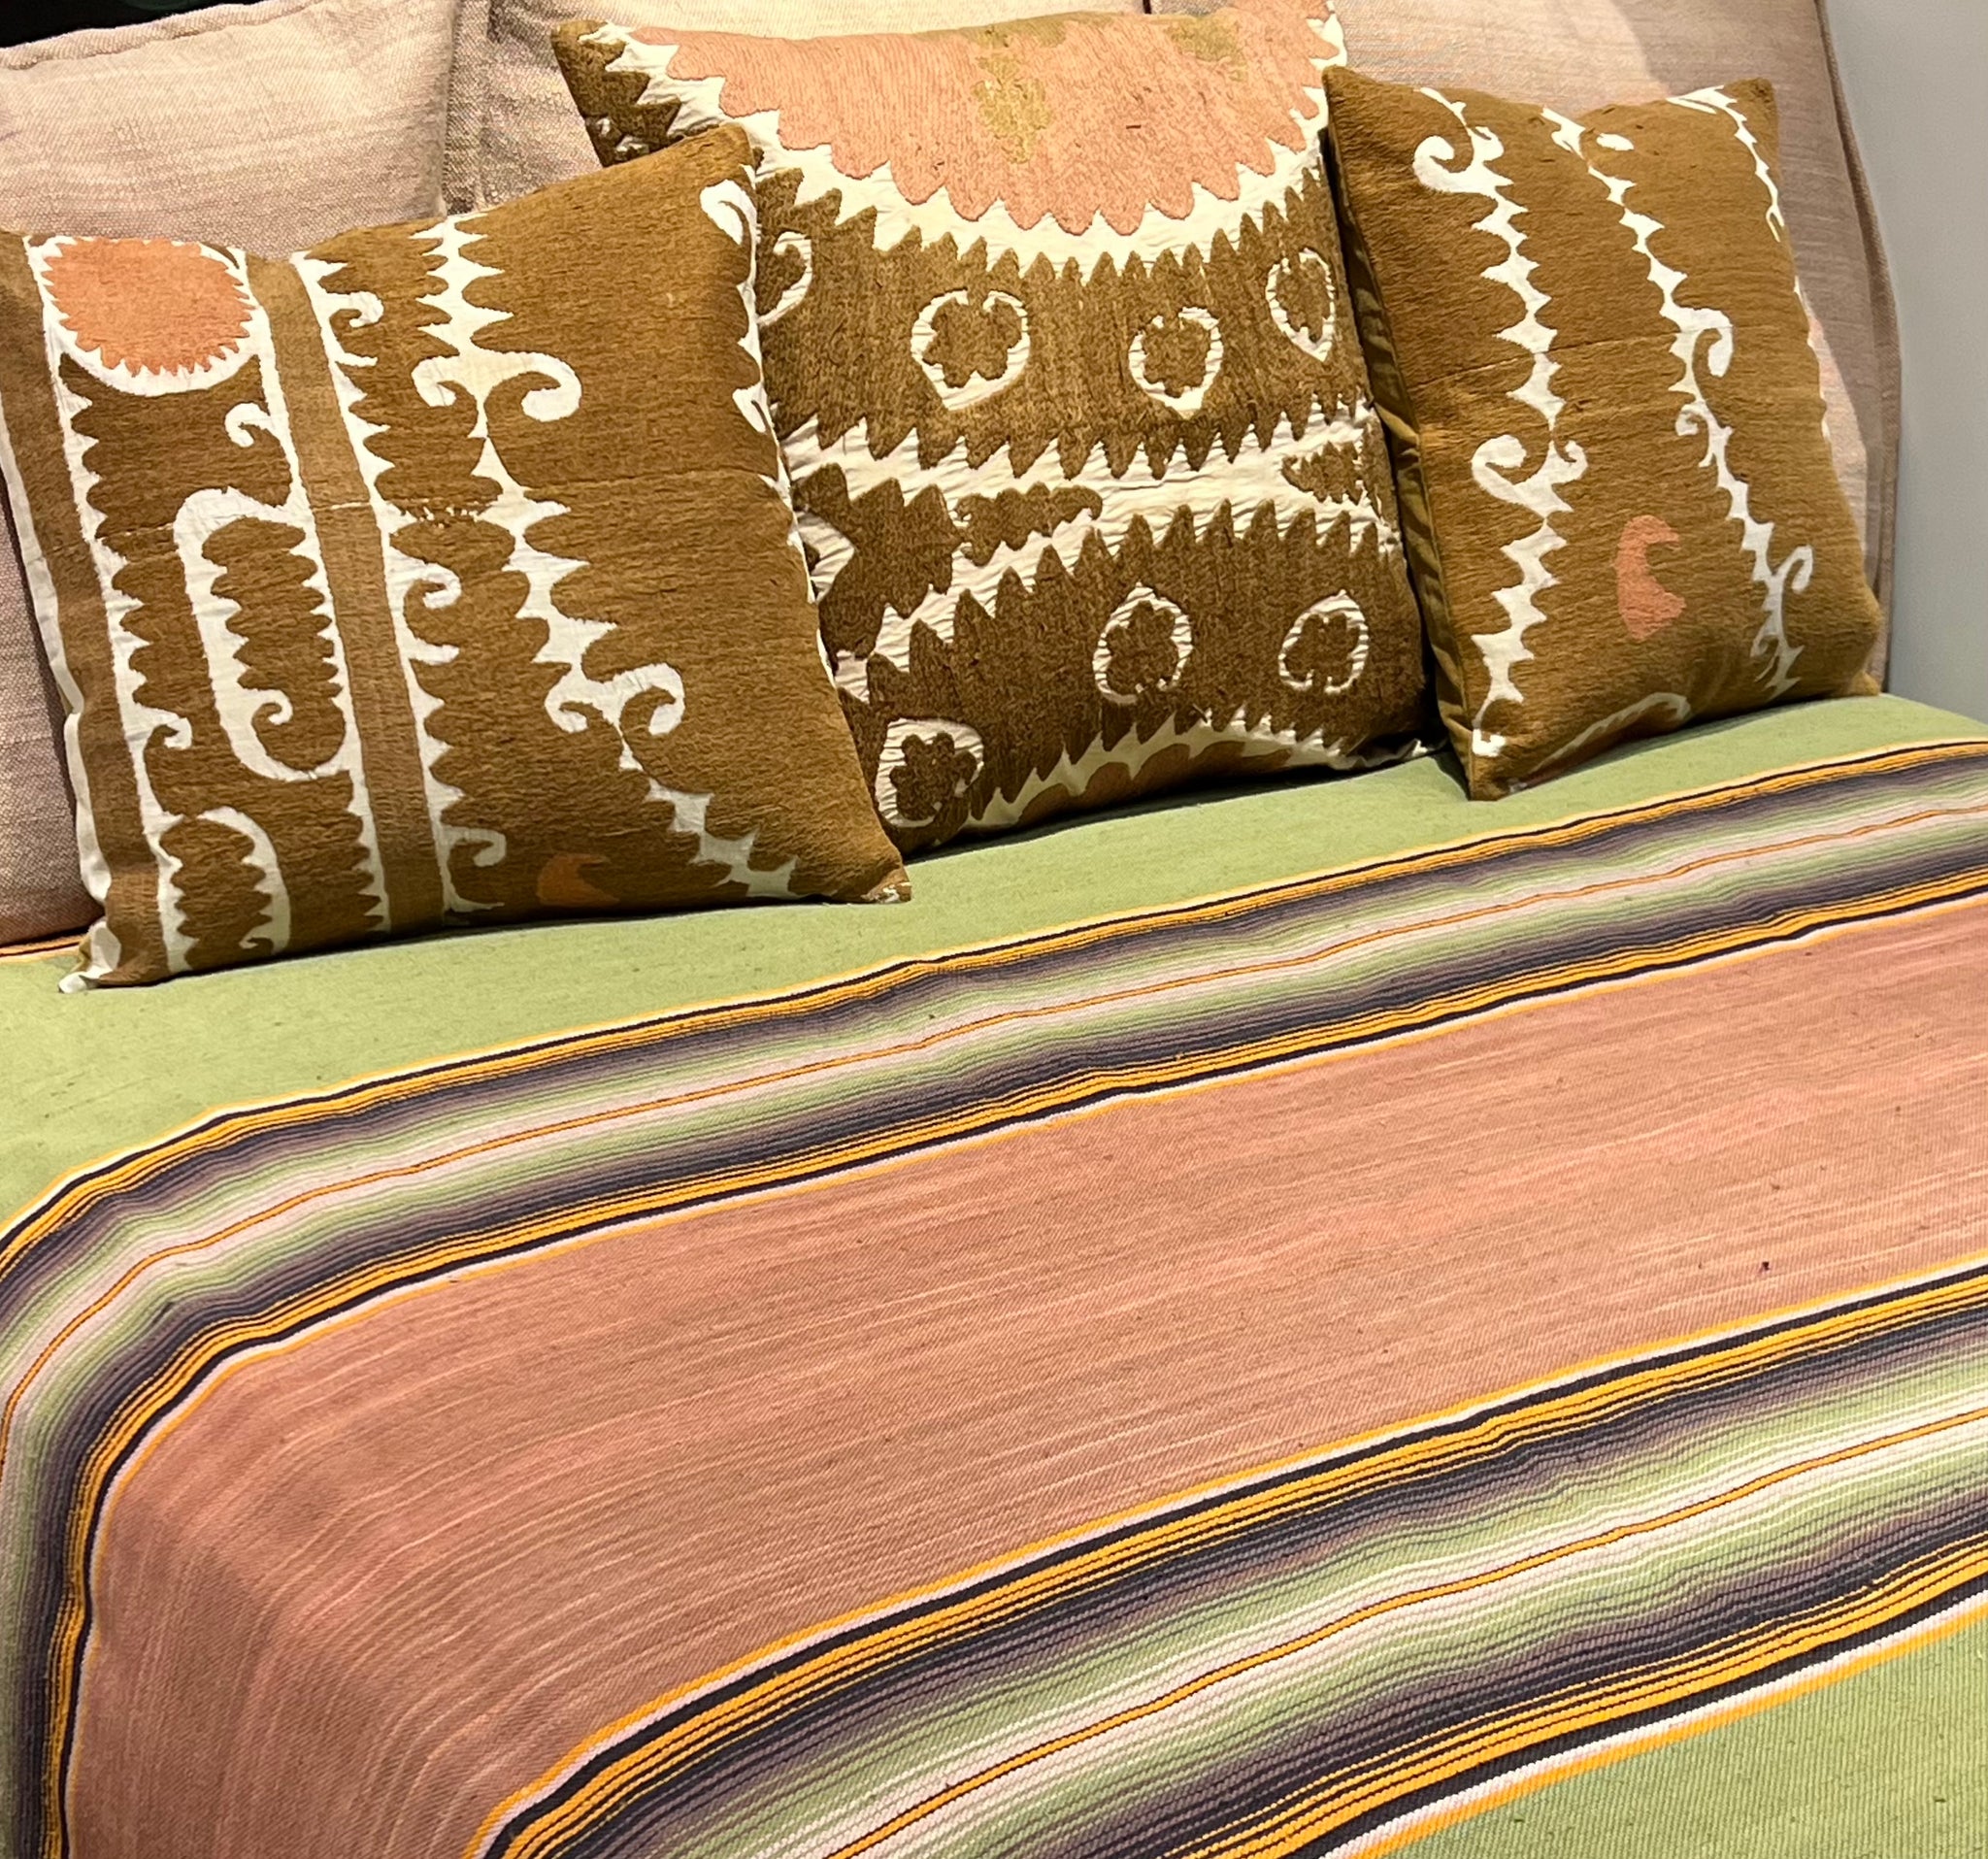 Earth handmade cotton bedspread by Sergio Martinez